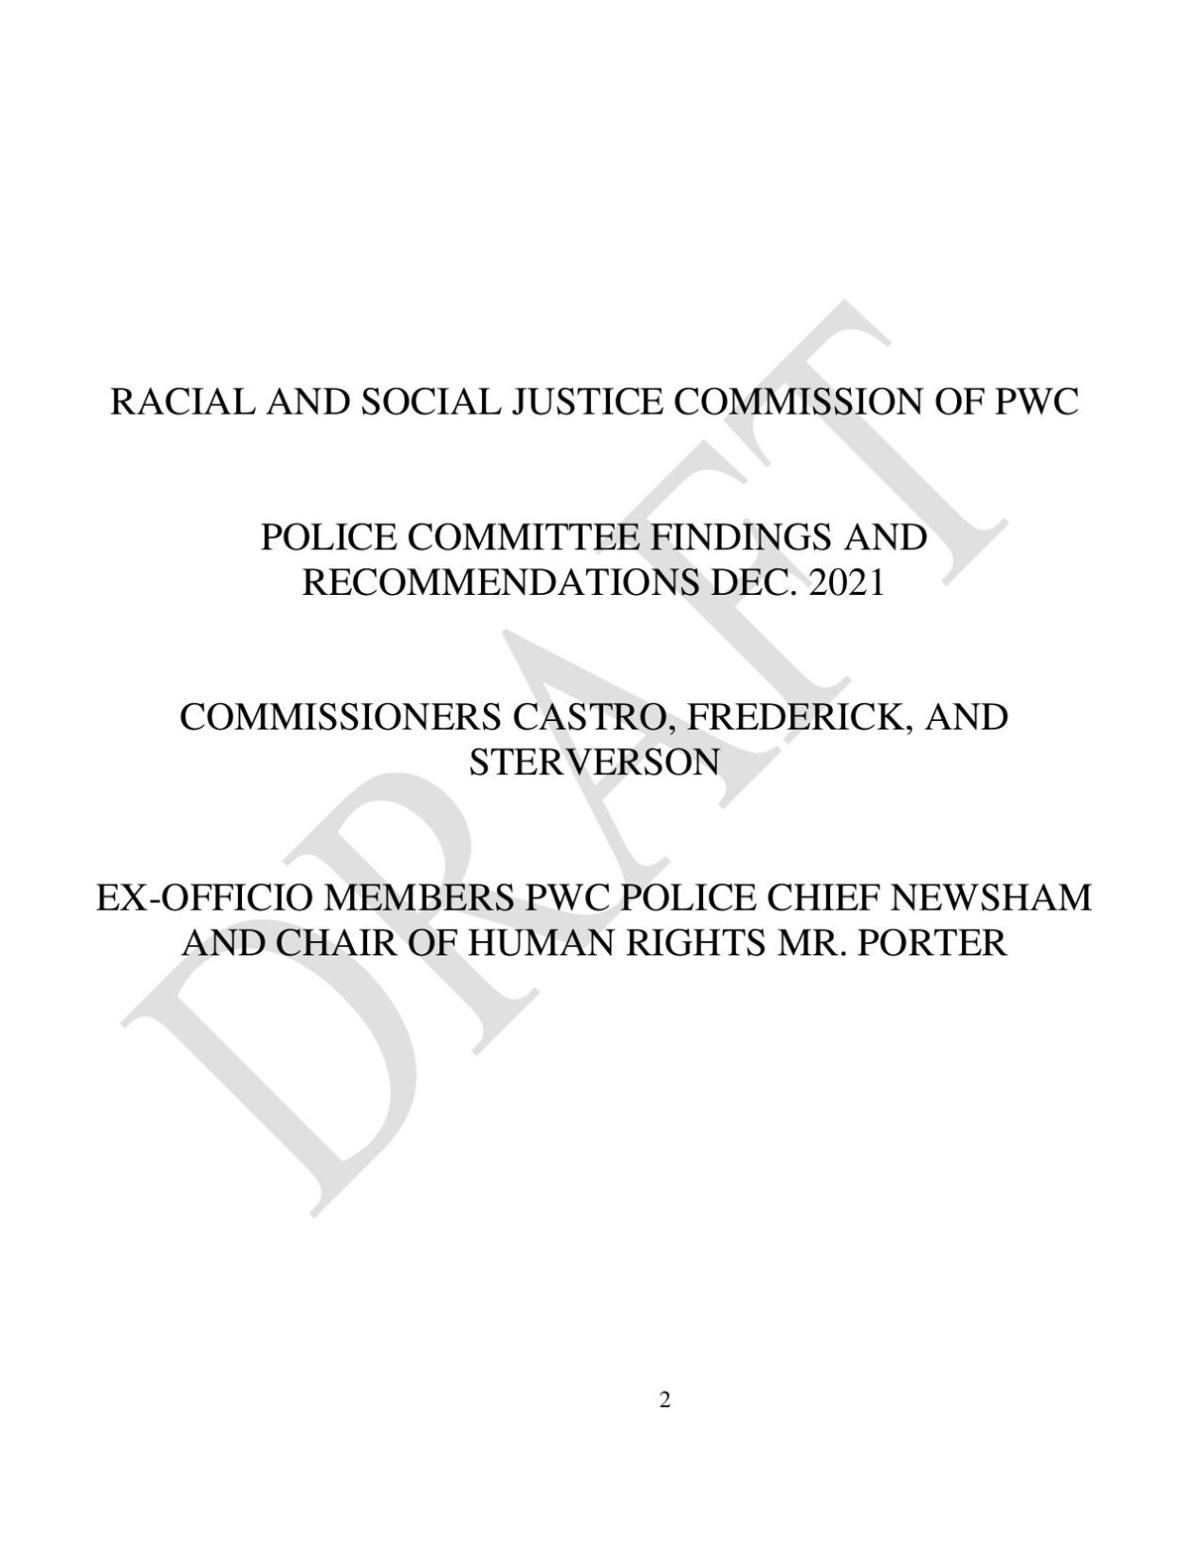 Draft racial justice committee report